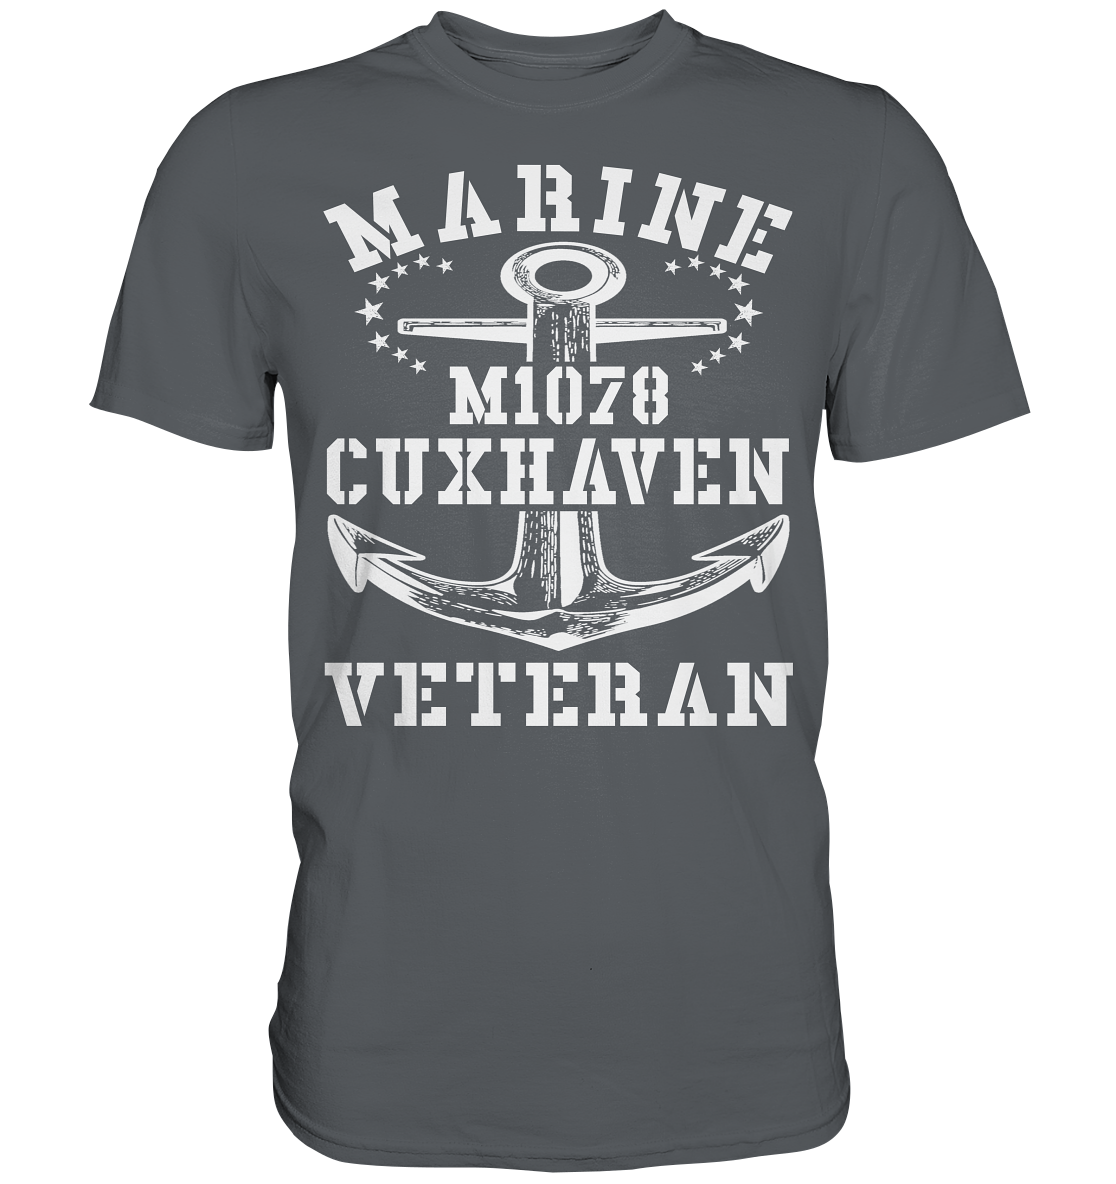 MARINE VETERAN M1078 CUXHAVEN - Premium Shirt